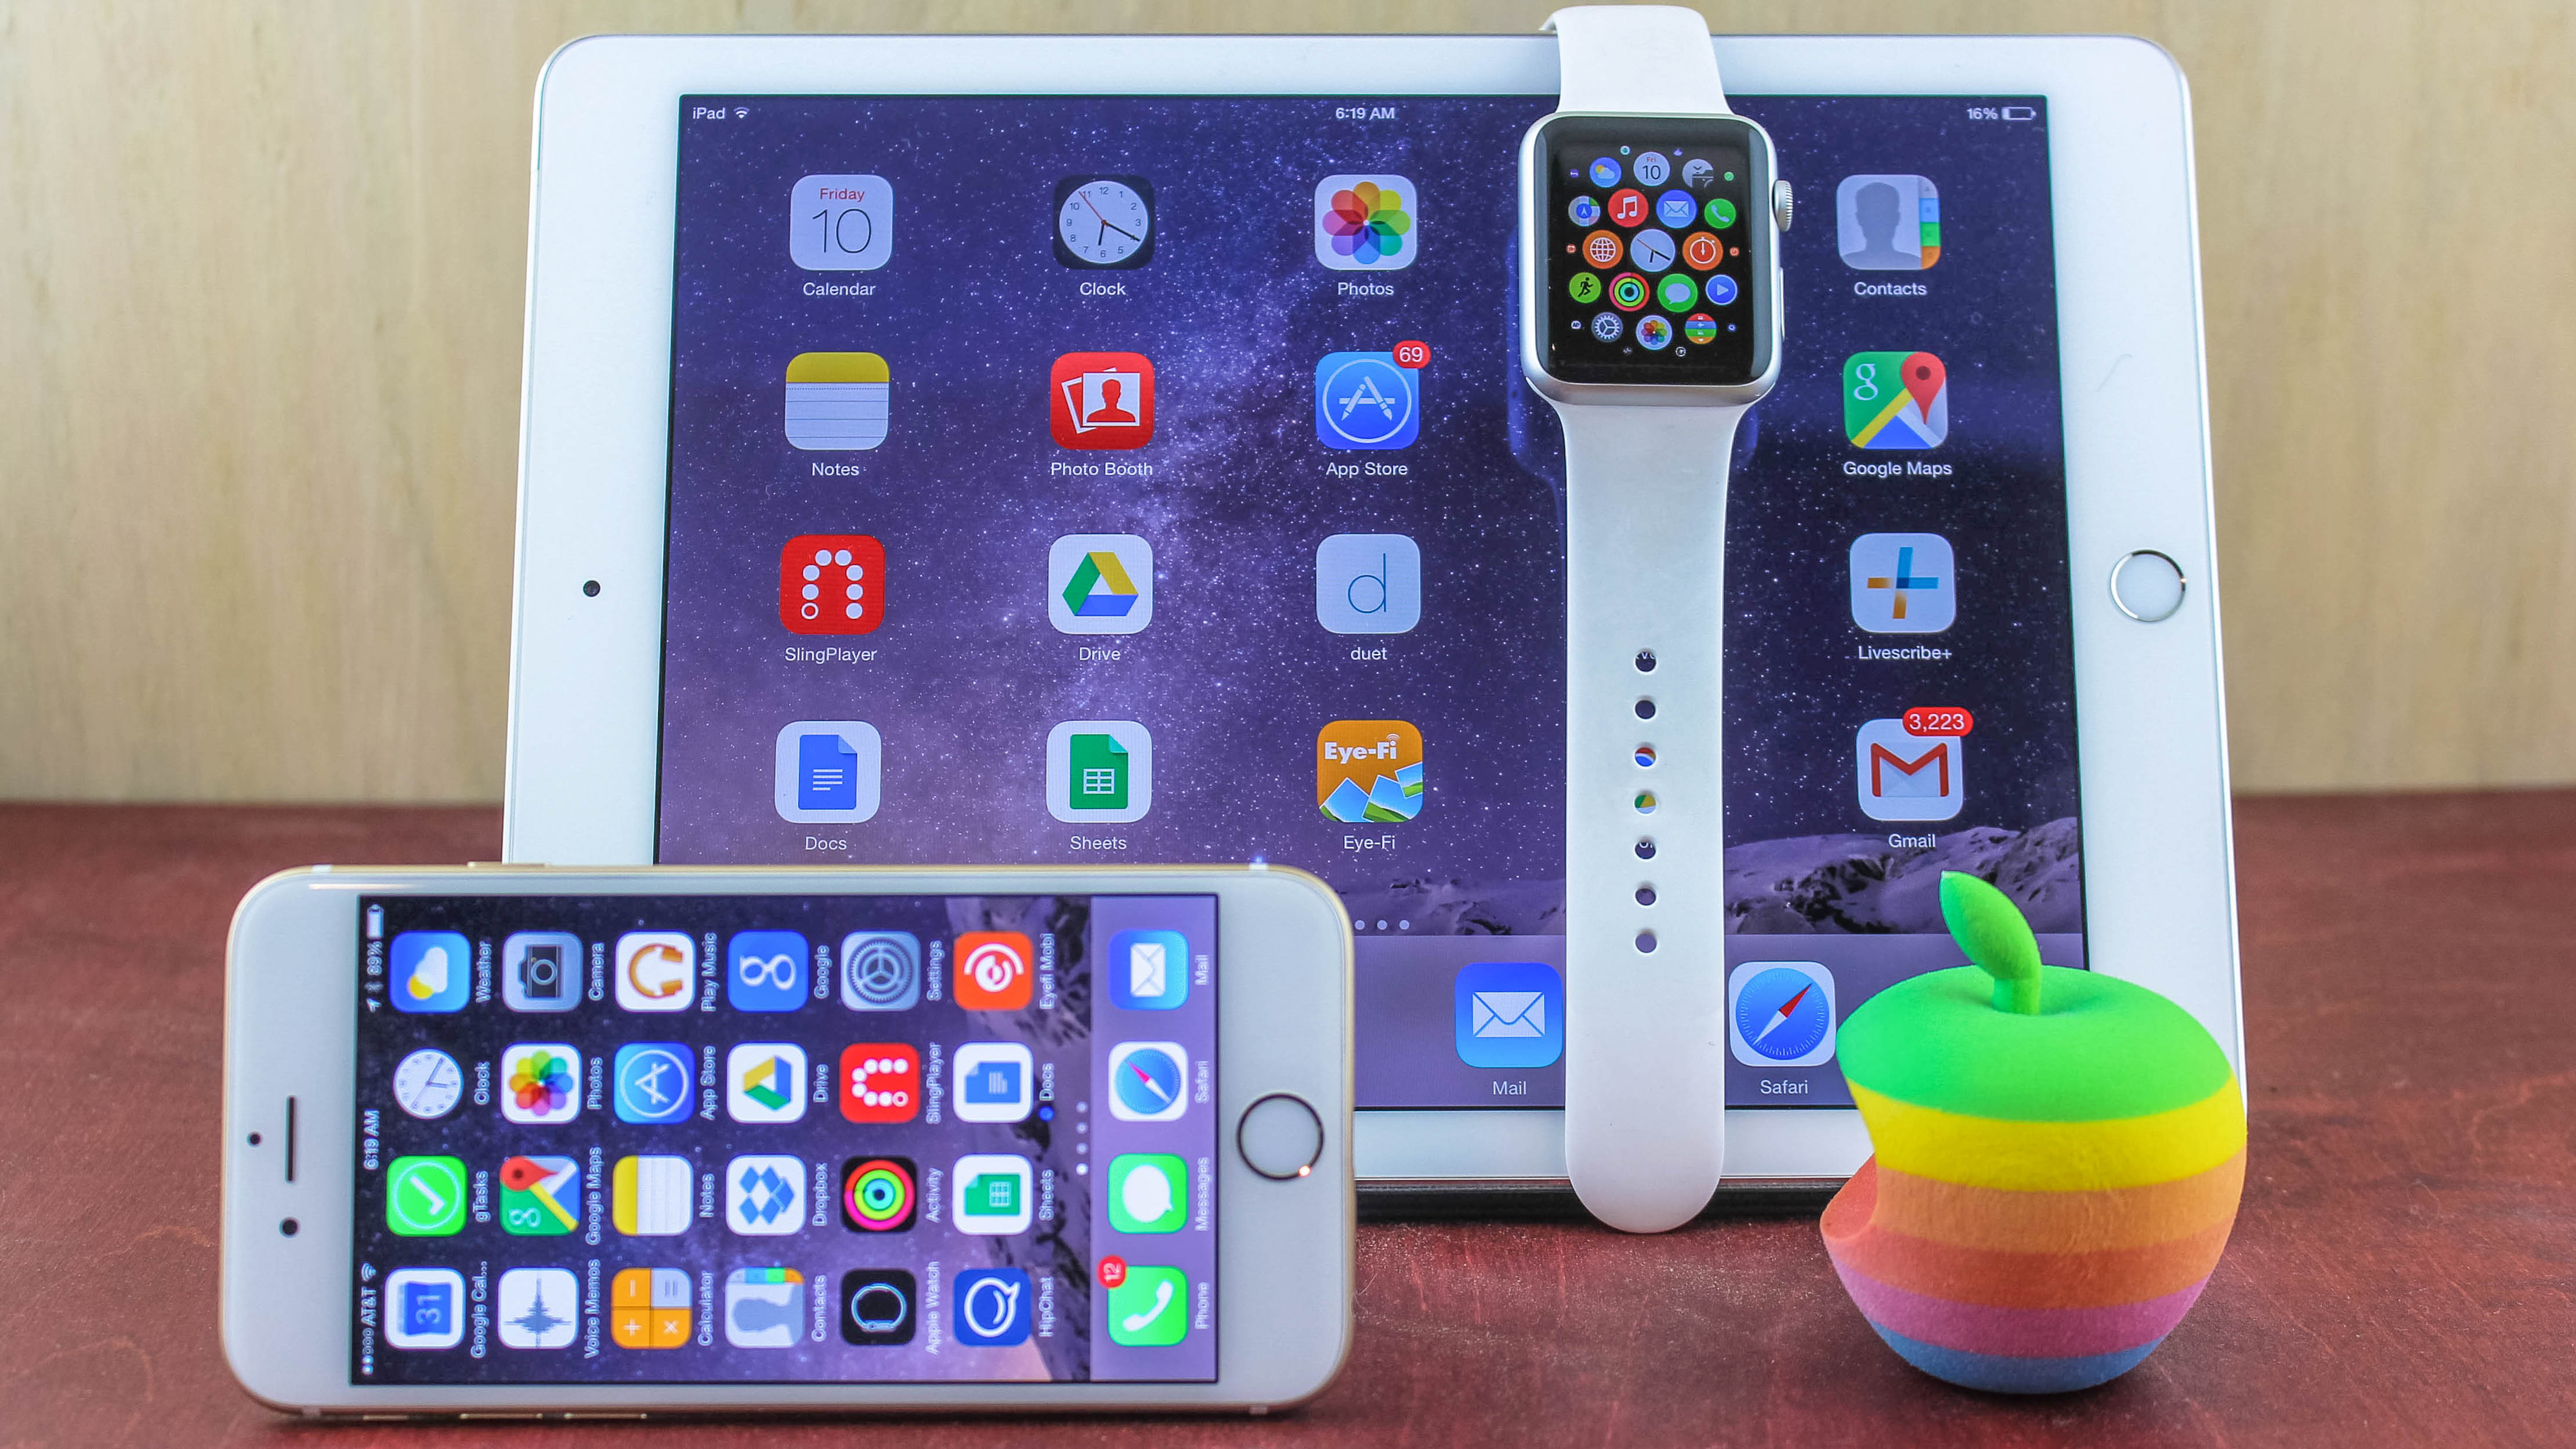 iOS 9 features - updated for iOS 9.3 | TechRadar